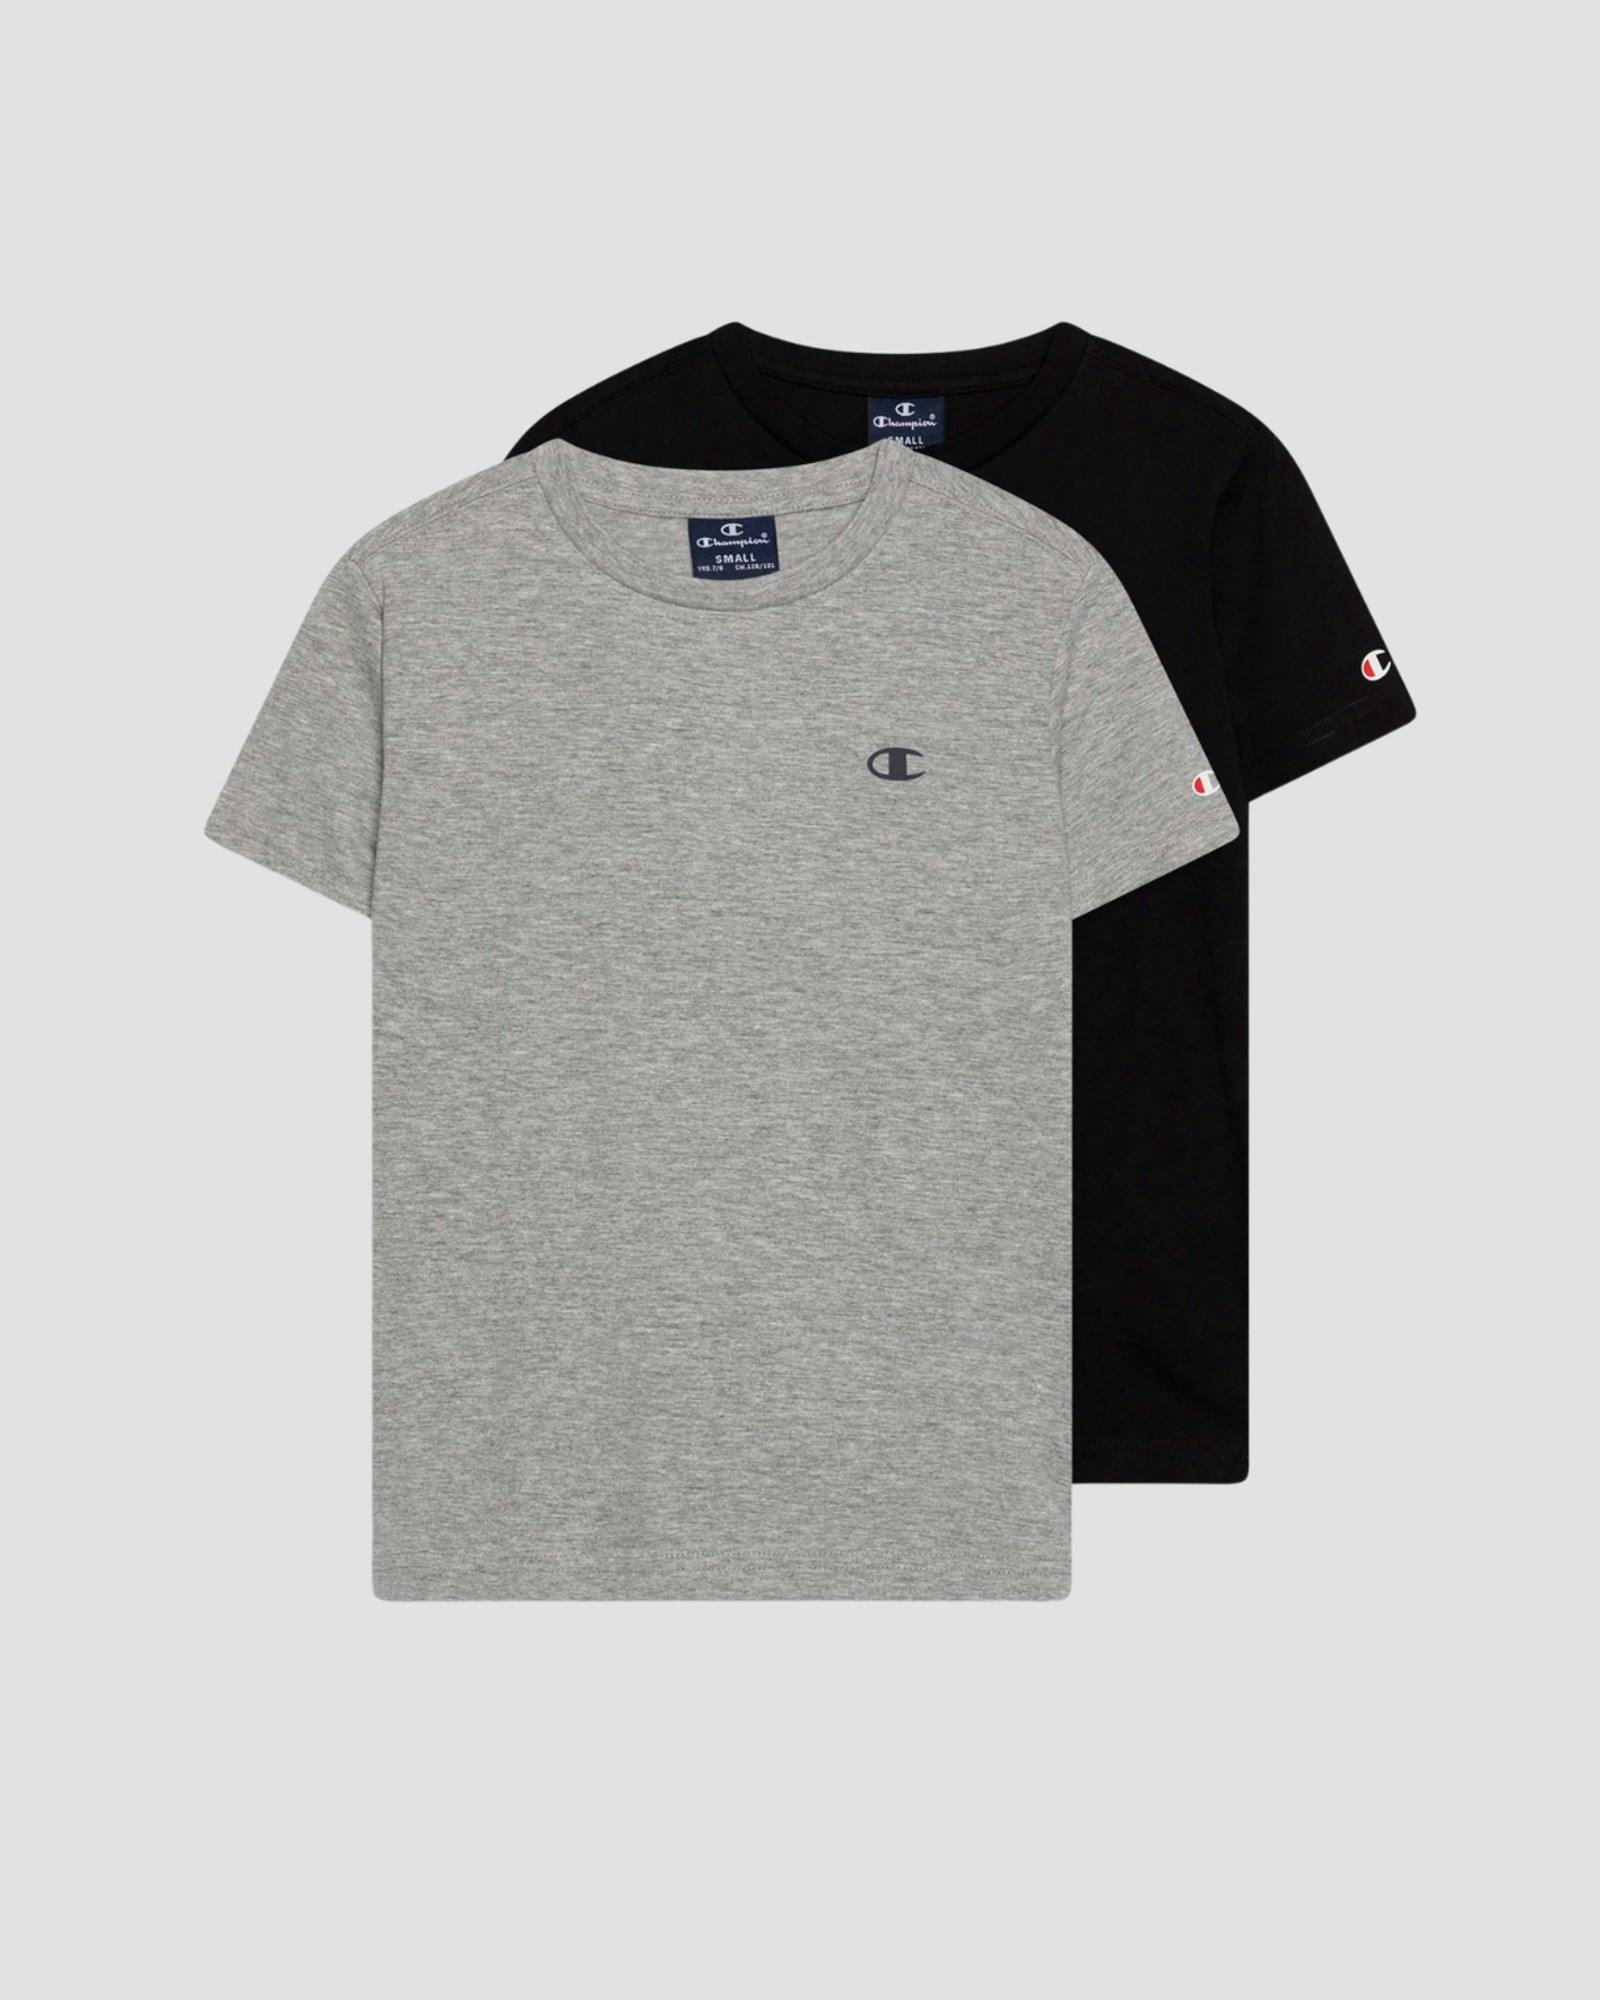 Grau Crewneck Brand Store T-Shirt | für Kids Jungen